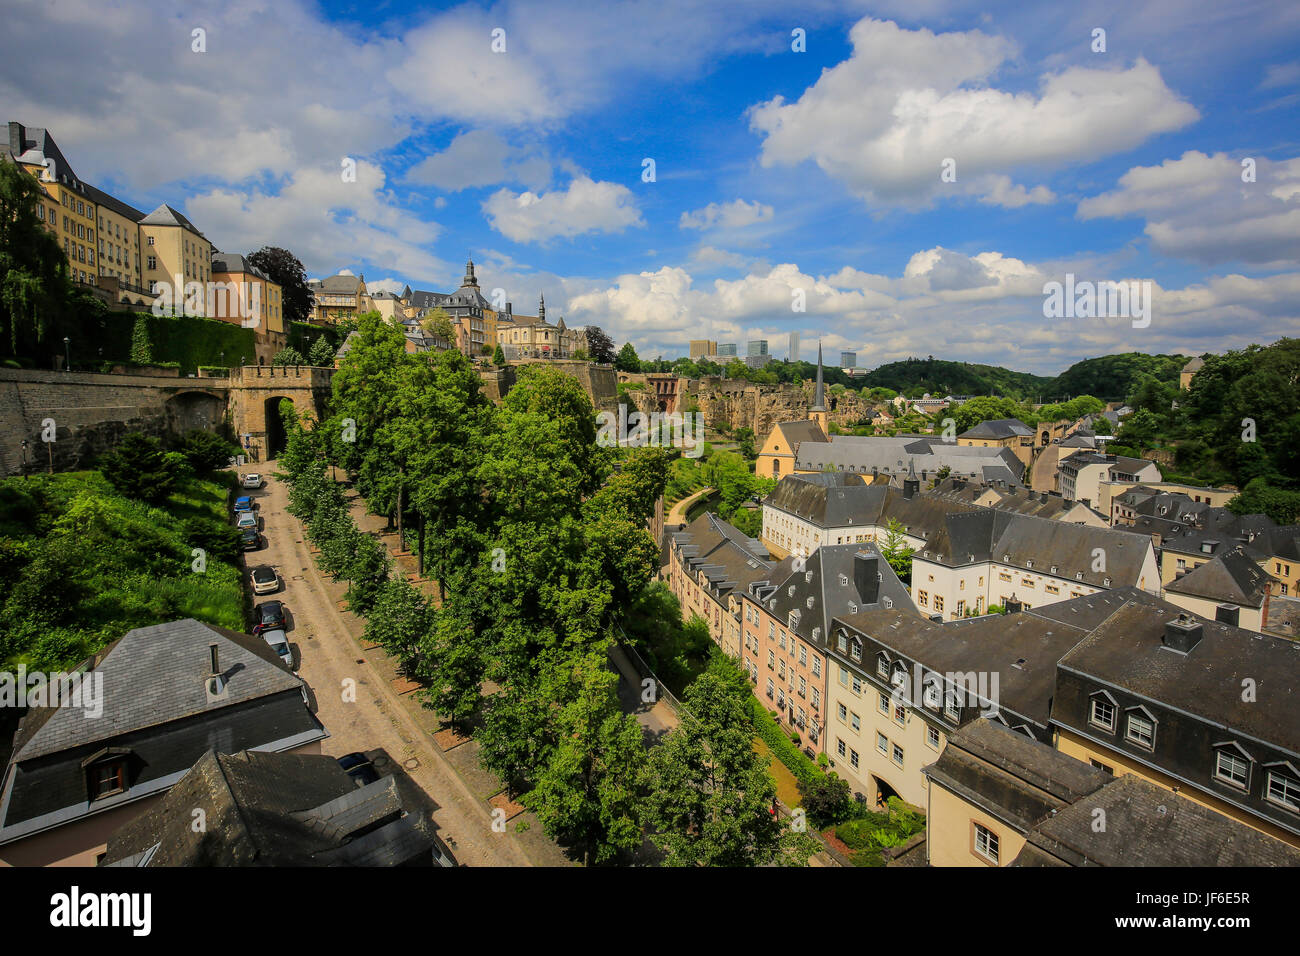 La città bassa, Distretto Grund, città di Lussemburgo, Granducato del Lussemburgo, Europa, Unterstadt Grund, Luxemburg Stadt, Gro§herzogtum Luxemburg, Europa Foto Stock